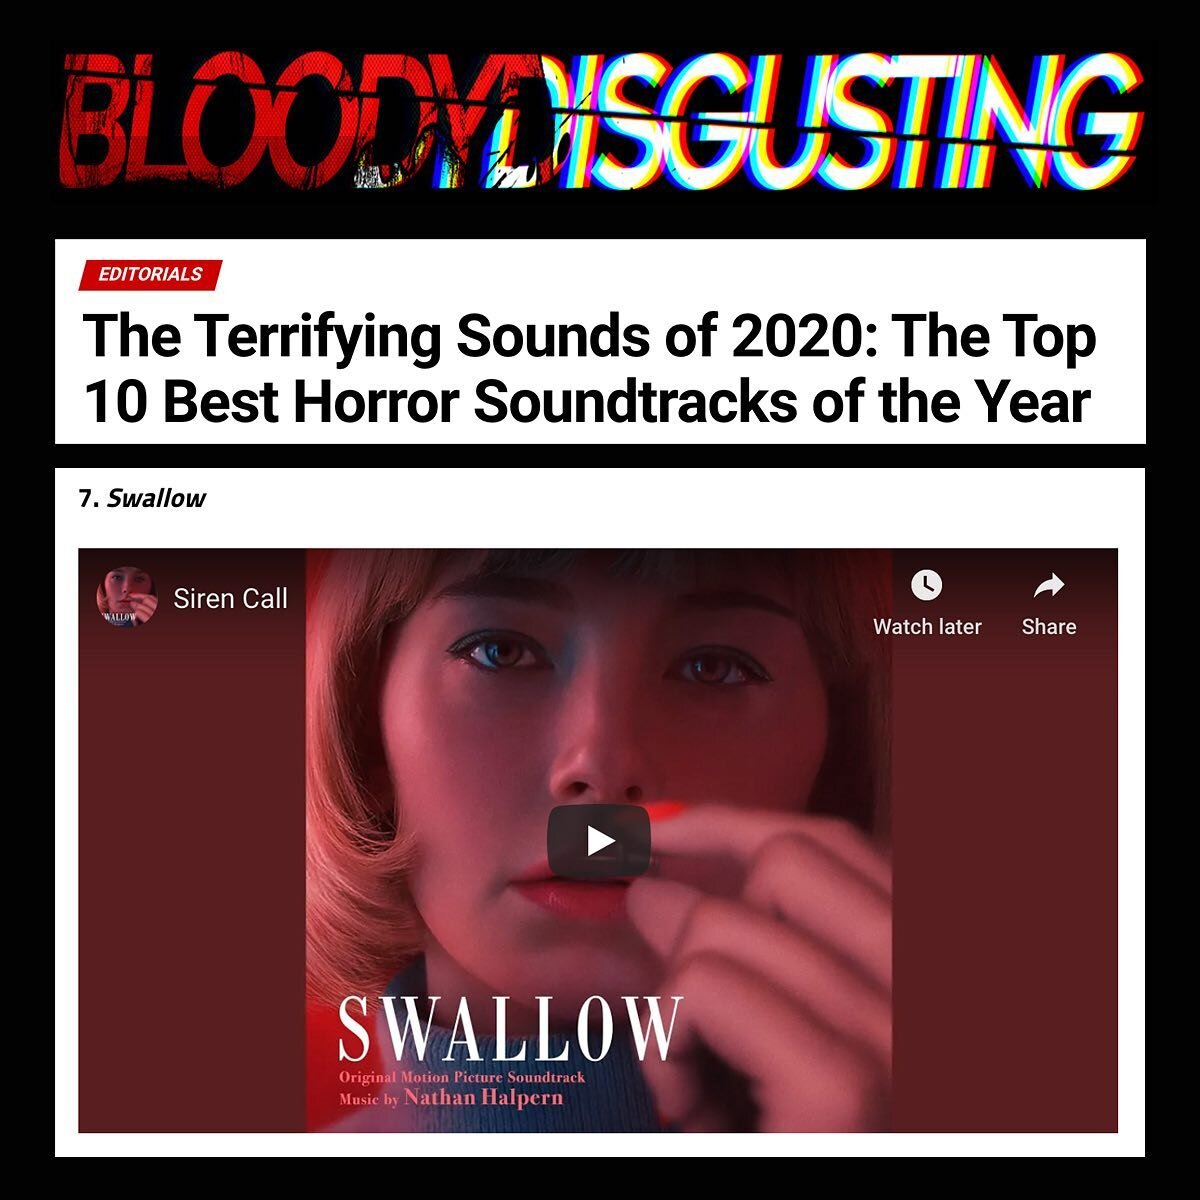 @swallow score featured on &ldquo;Top 10 Best Horror Soundtracks Of the Year&rdquo; via @bdisgusting @carlomirabelladavis 
@halolorraine, @katearizmendi, @mollye_asher, @mynettelouie, @hernamewasmagill, @lienedobraja, @kai_stamps, @joemurphyjoe, @nat